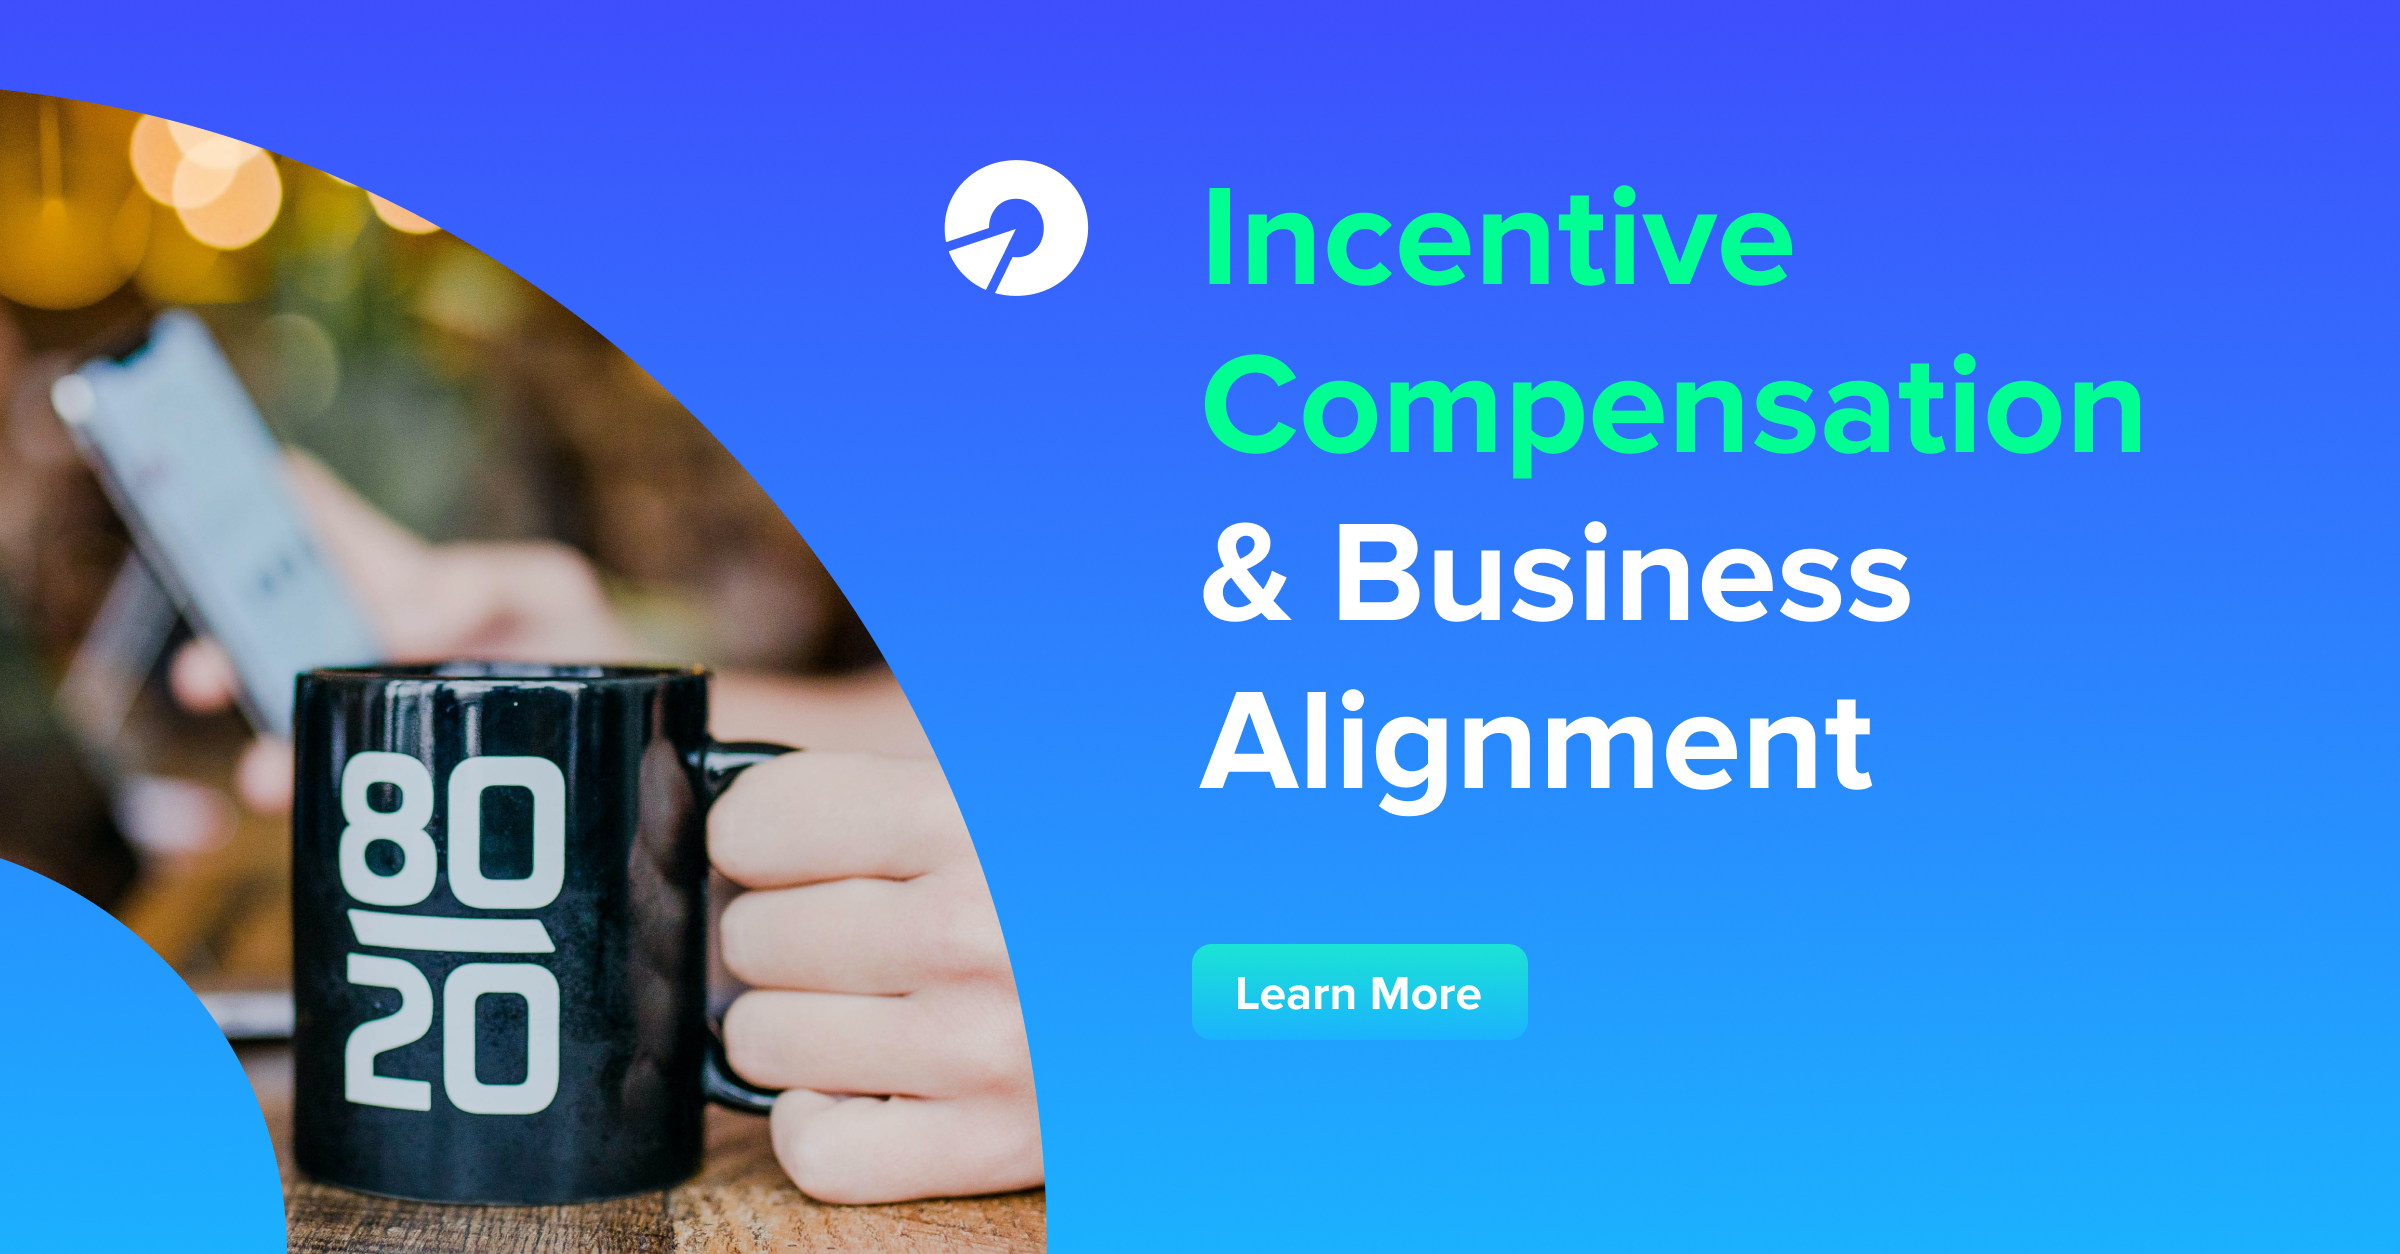 Incentive Compensation & Business Alignment